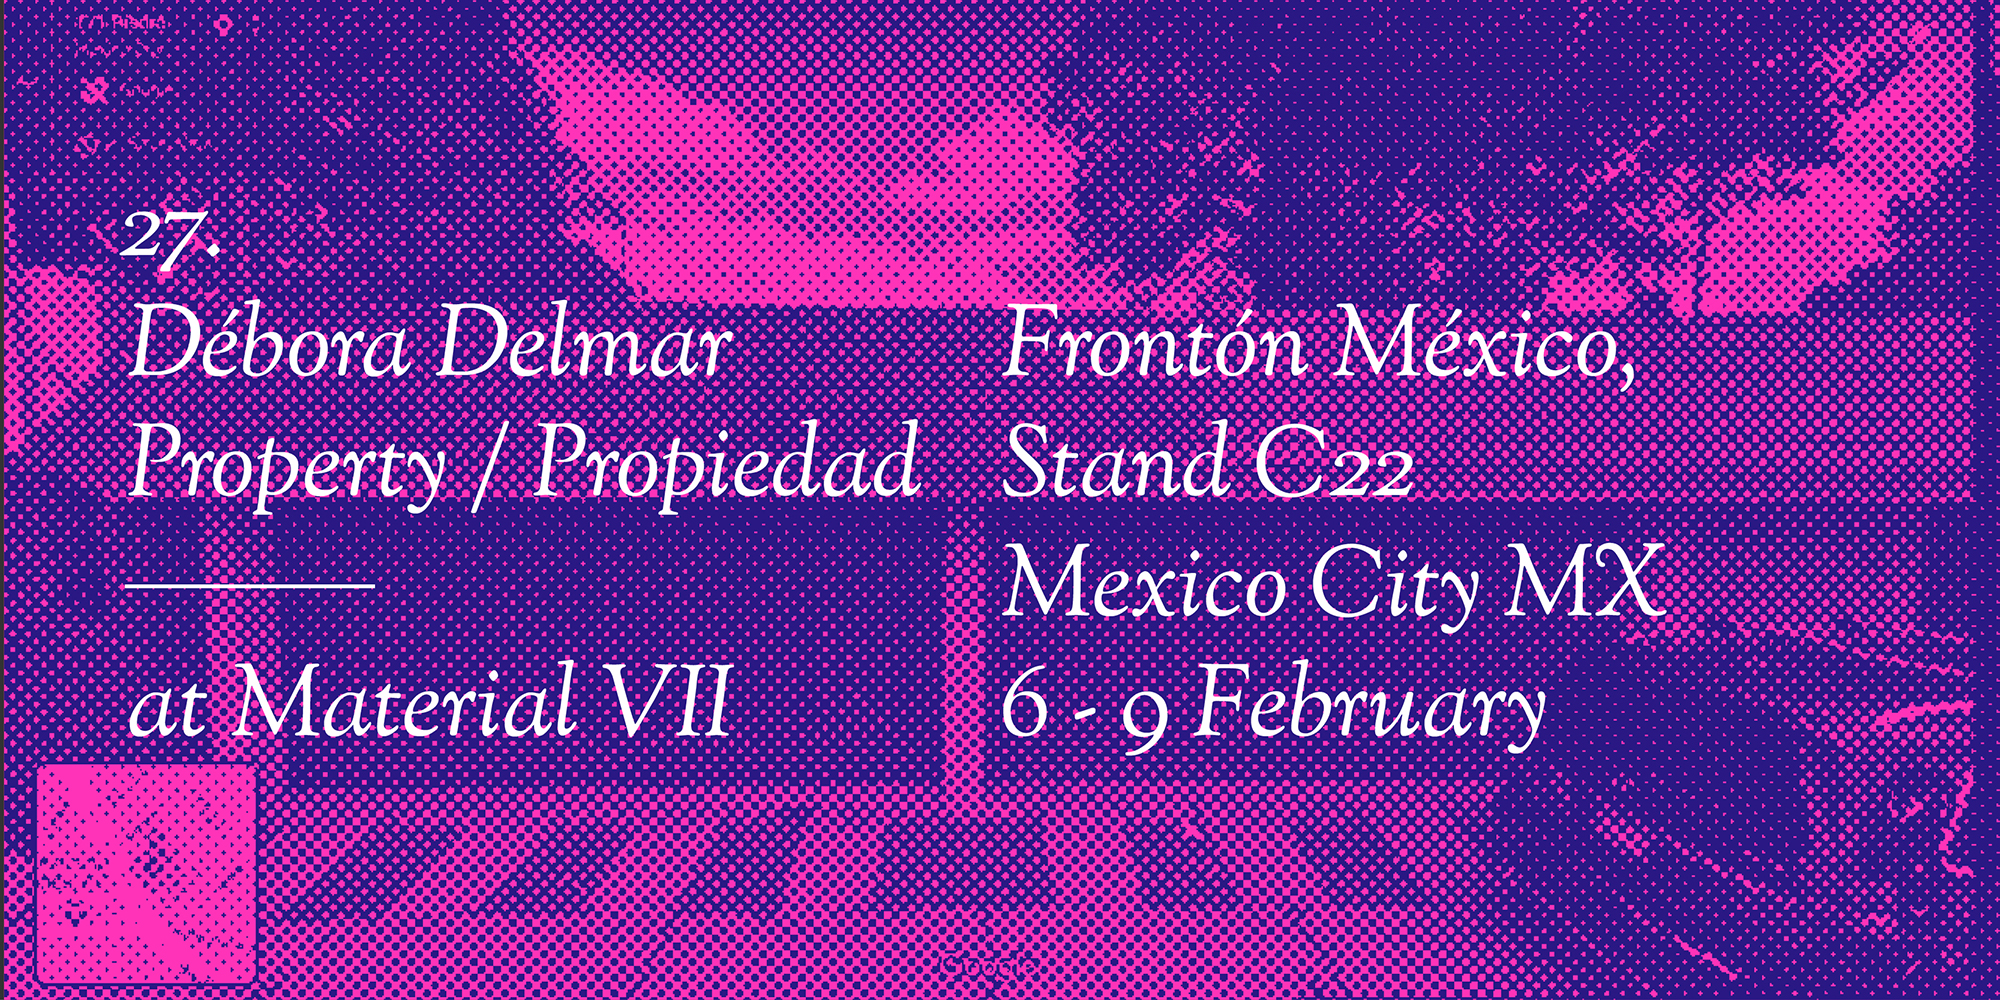 Débora Delmar, Property/Propiedad, Syndicate at Material Art Fair VII, Mexico City MX